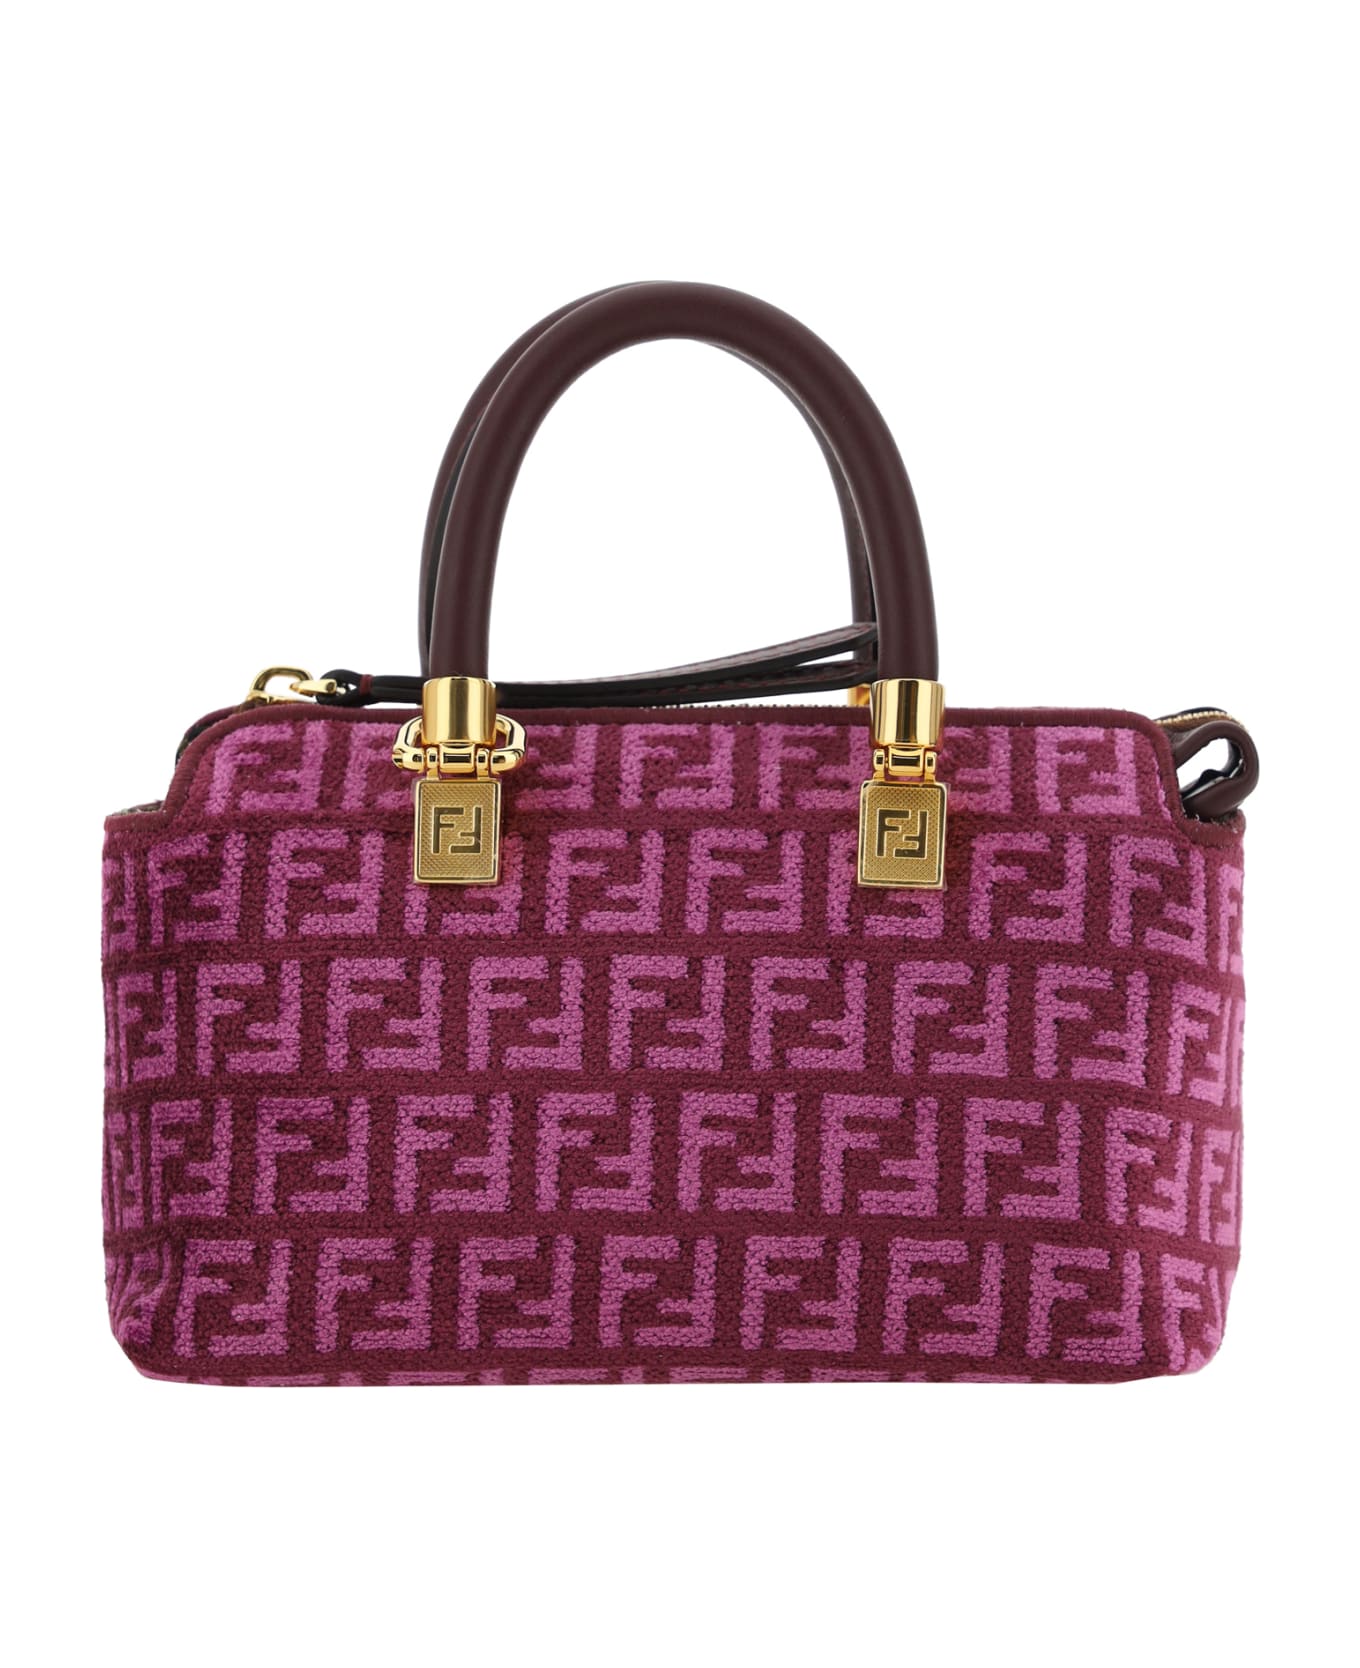 Fendi Mini By The Way Handbag - Pink, brown